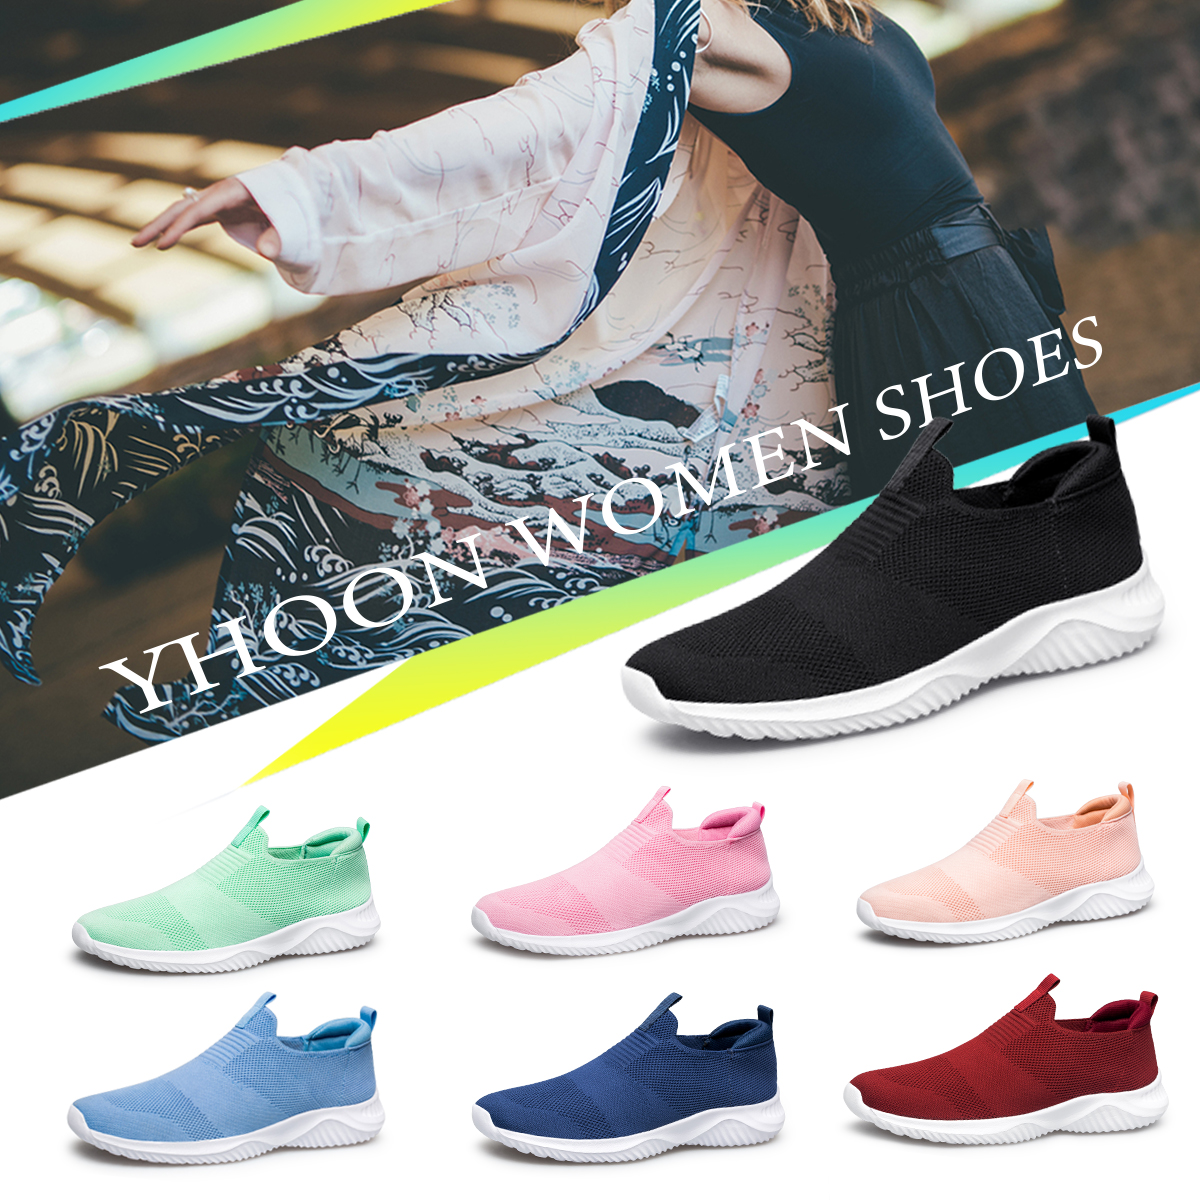 YHOON Women's Walking Shoes - Slip on Sneakers Lightweight Tennis Shoes ...